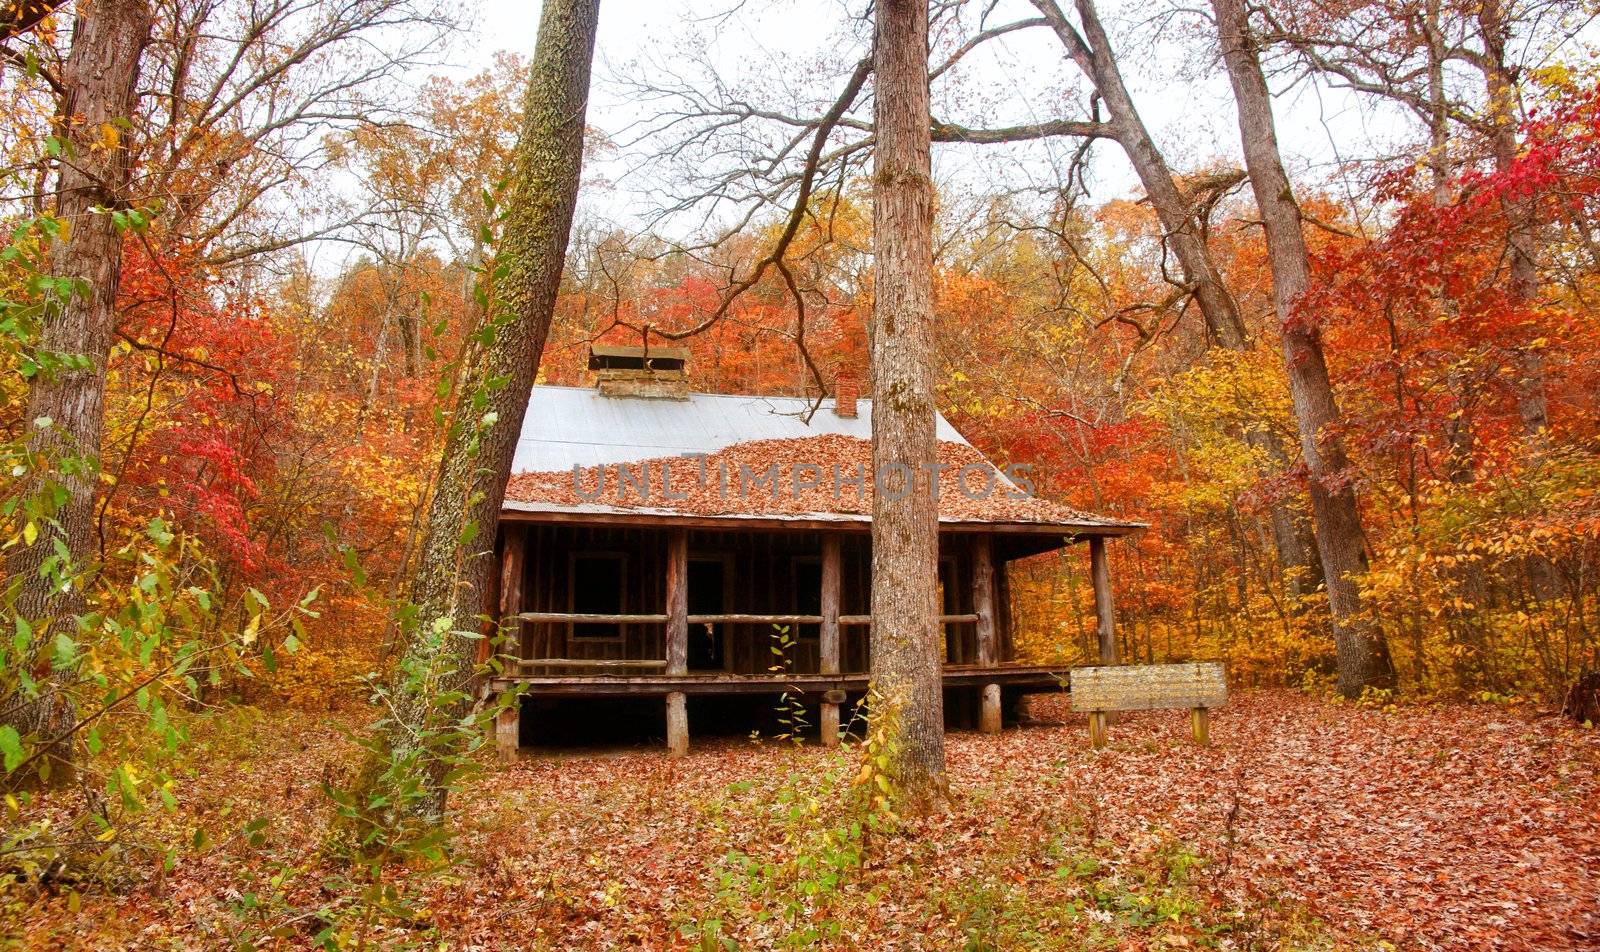 settlers cabin in missouri by clearviewstock